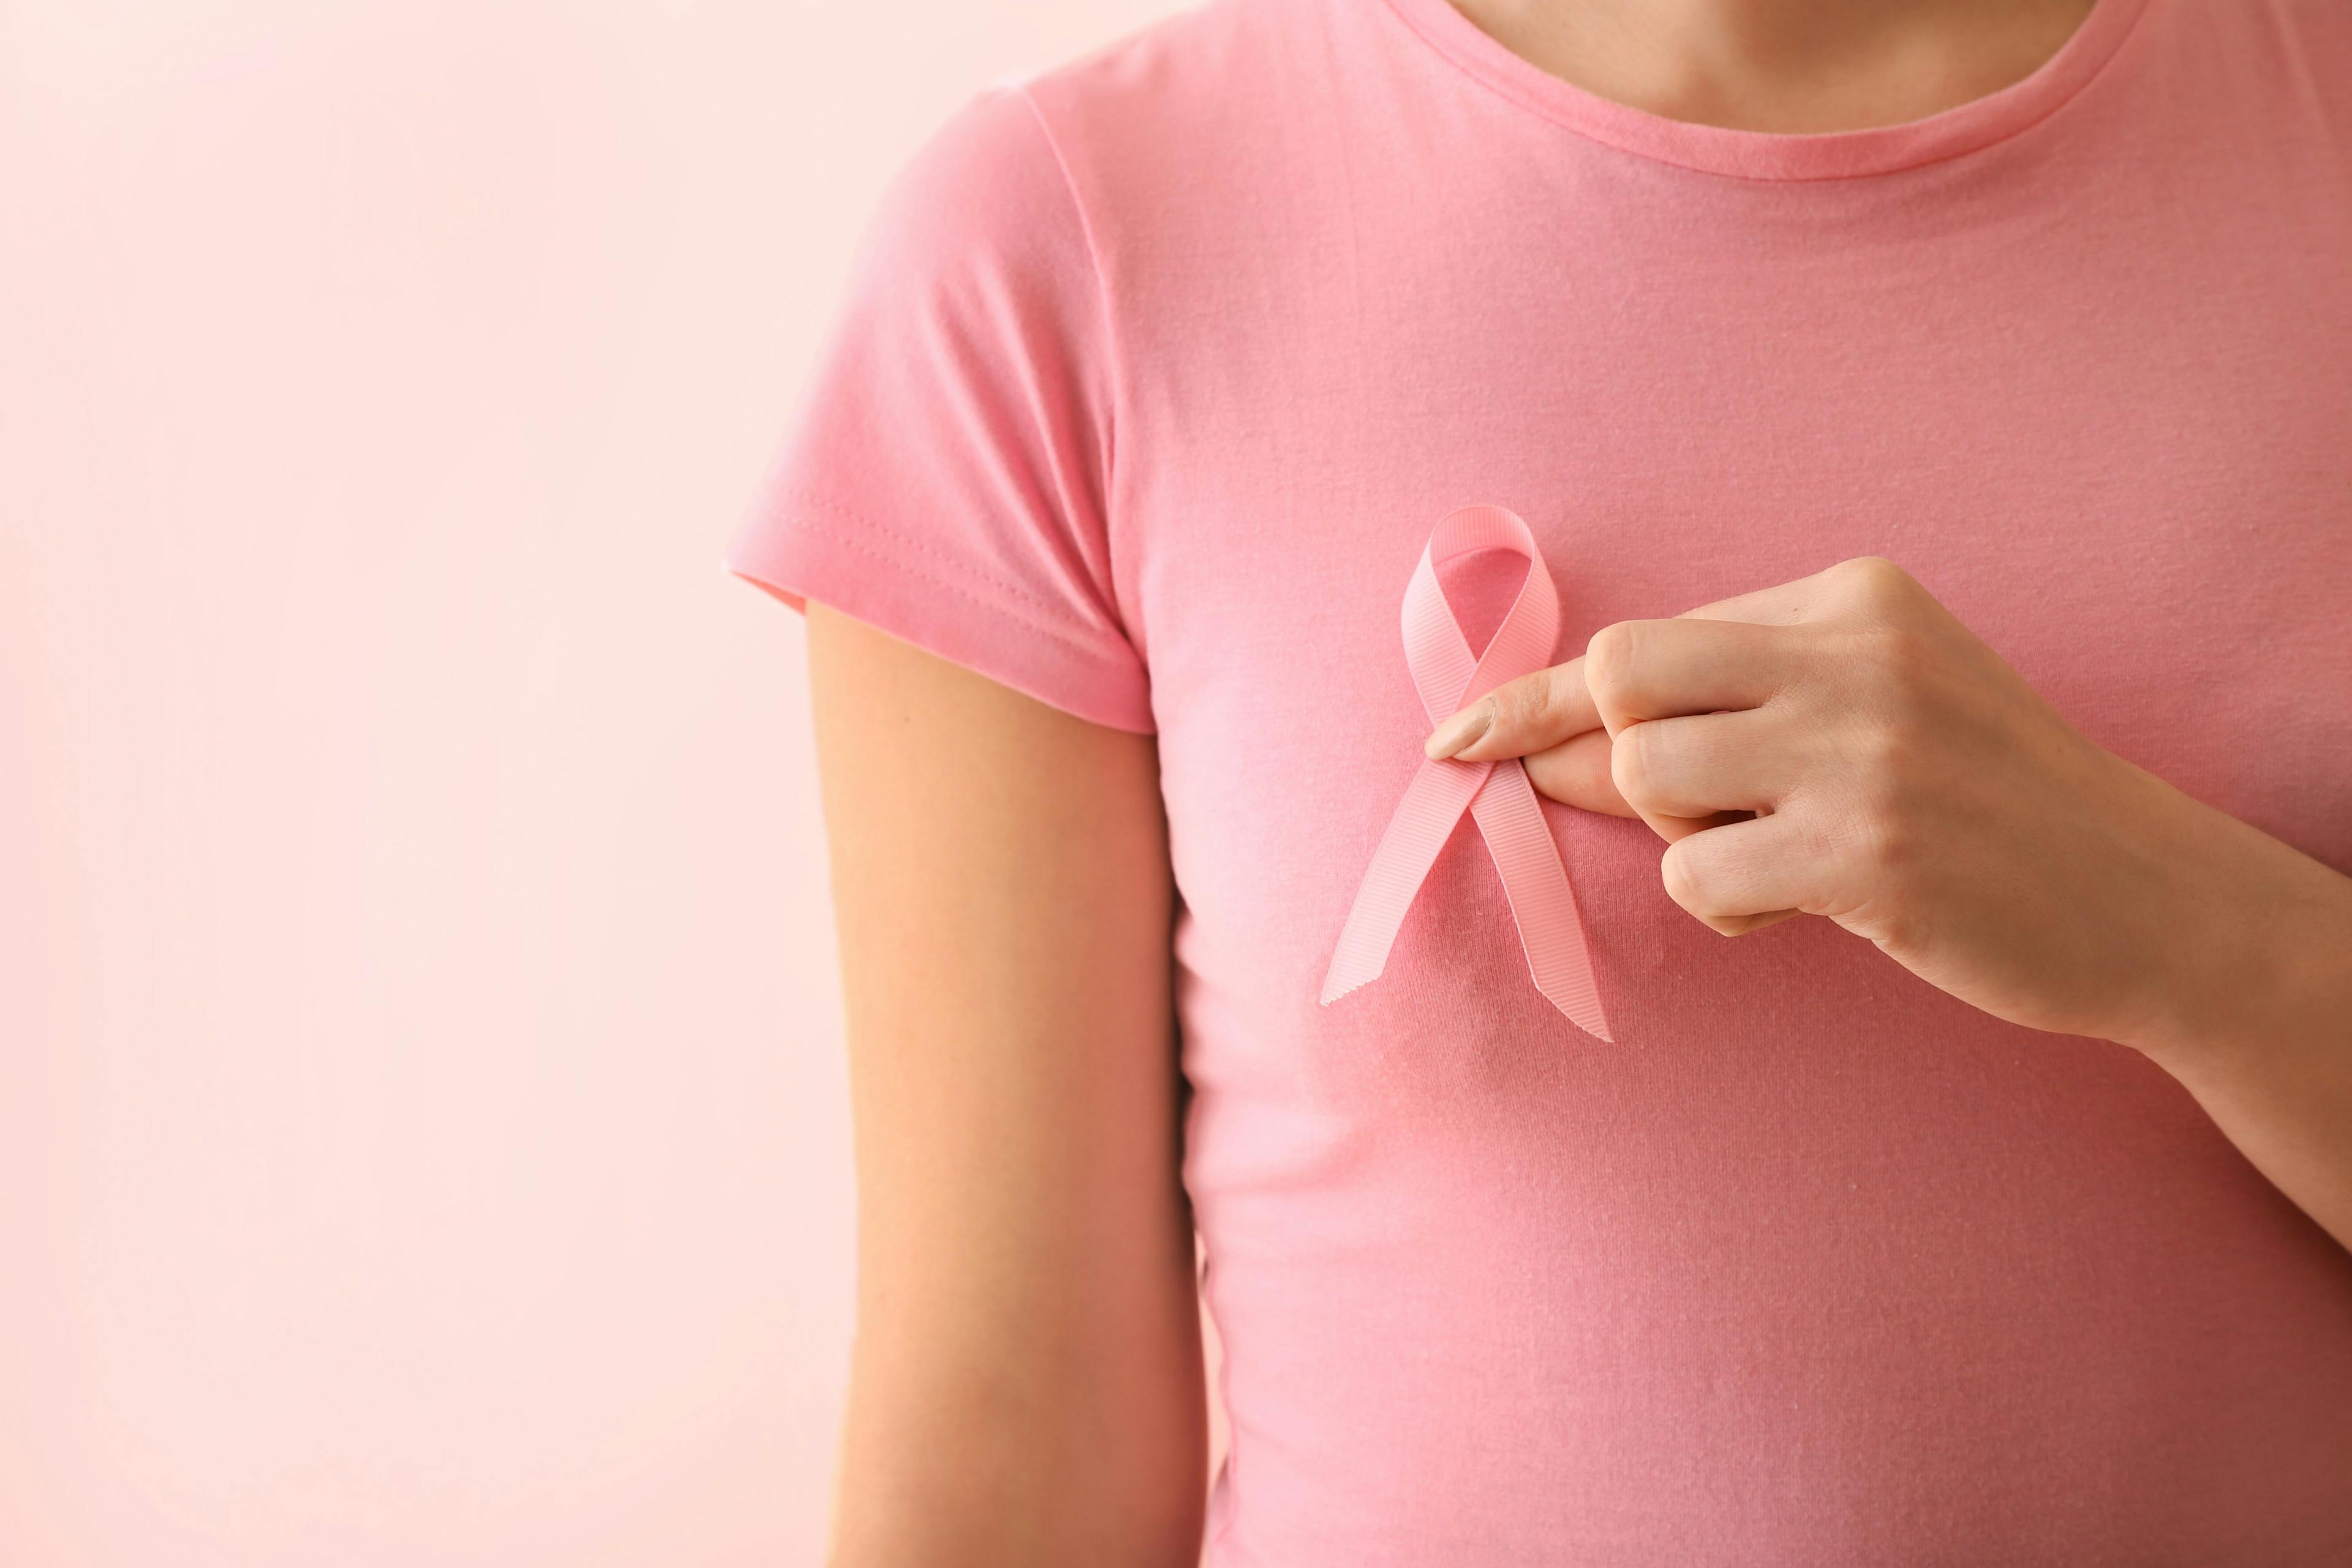 Expert: Evolution of Management of Breast Cancer has "Undergone Profound Changes"